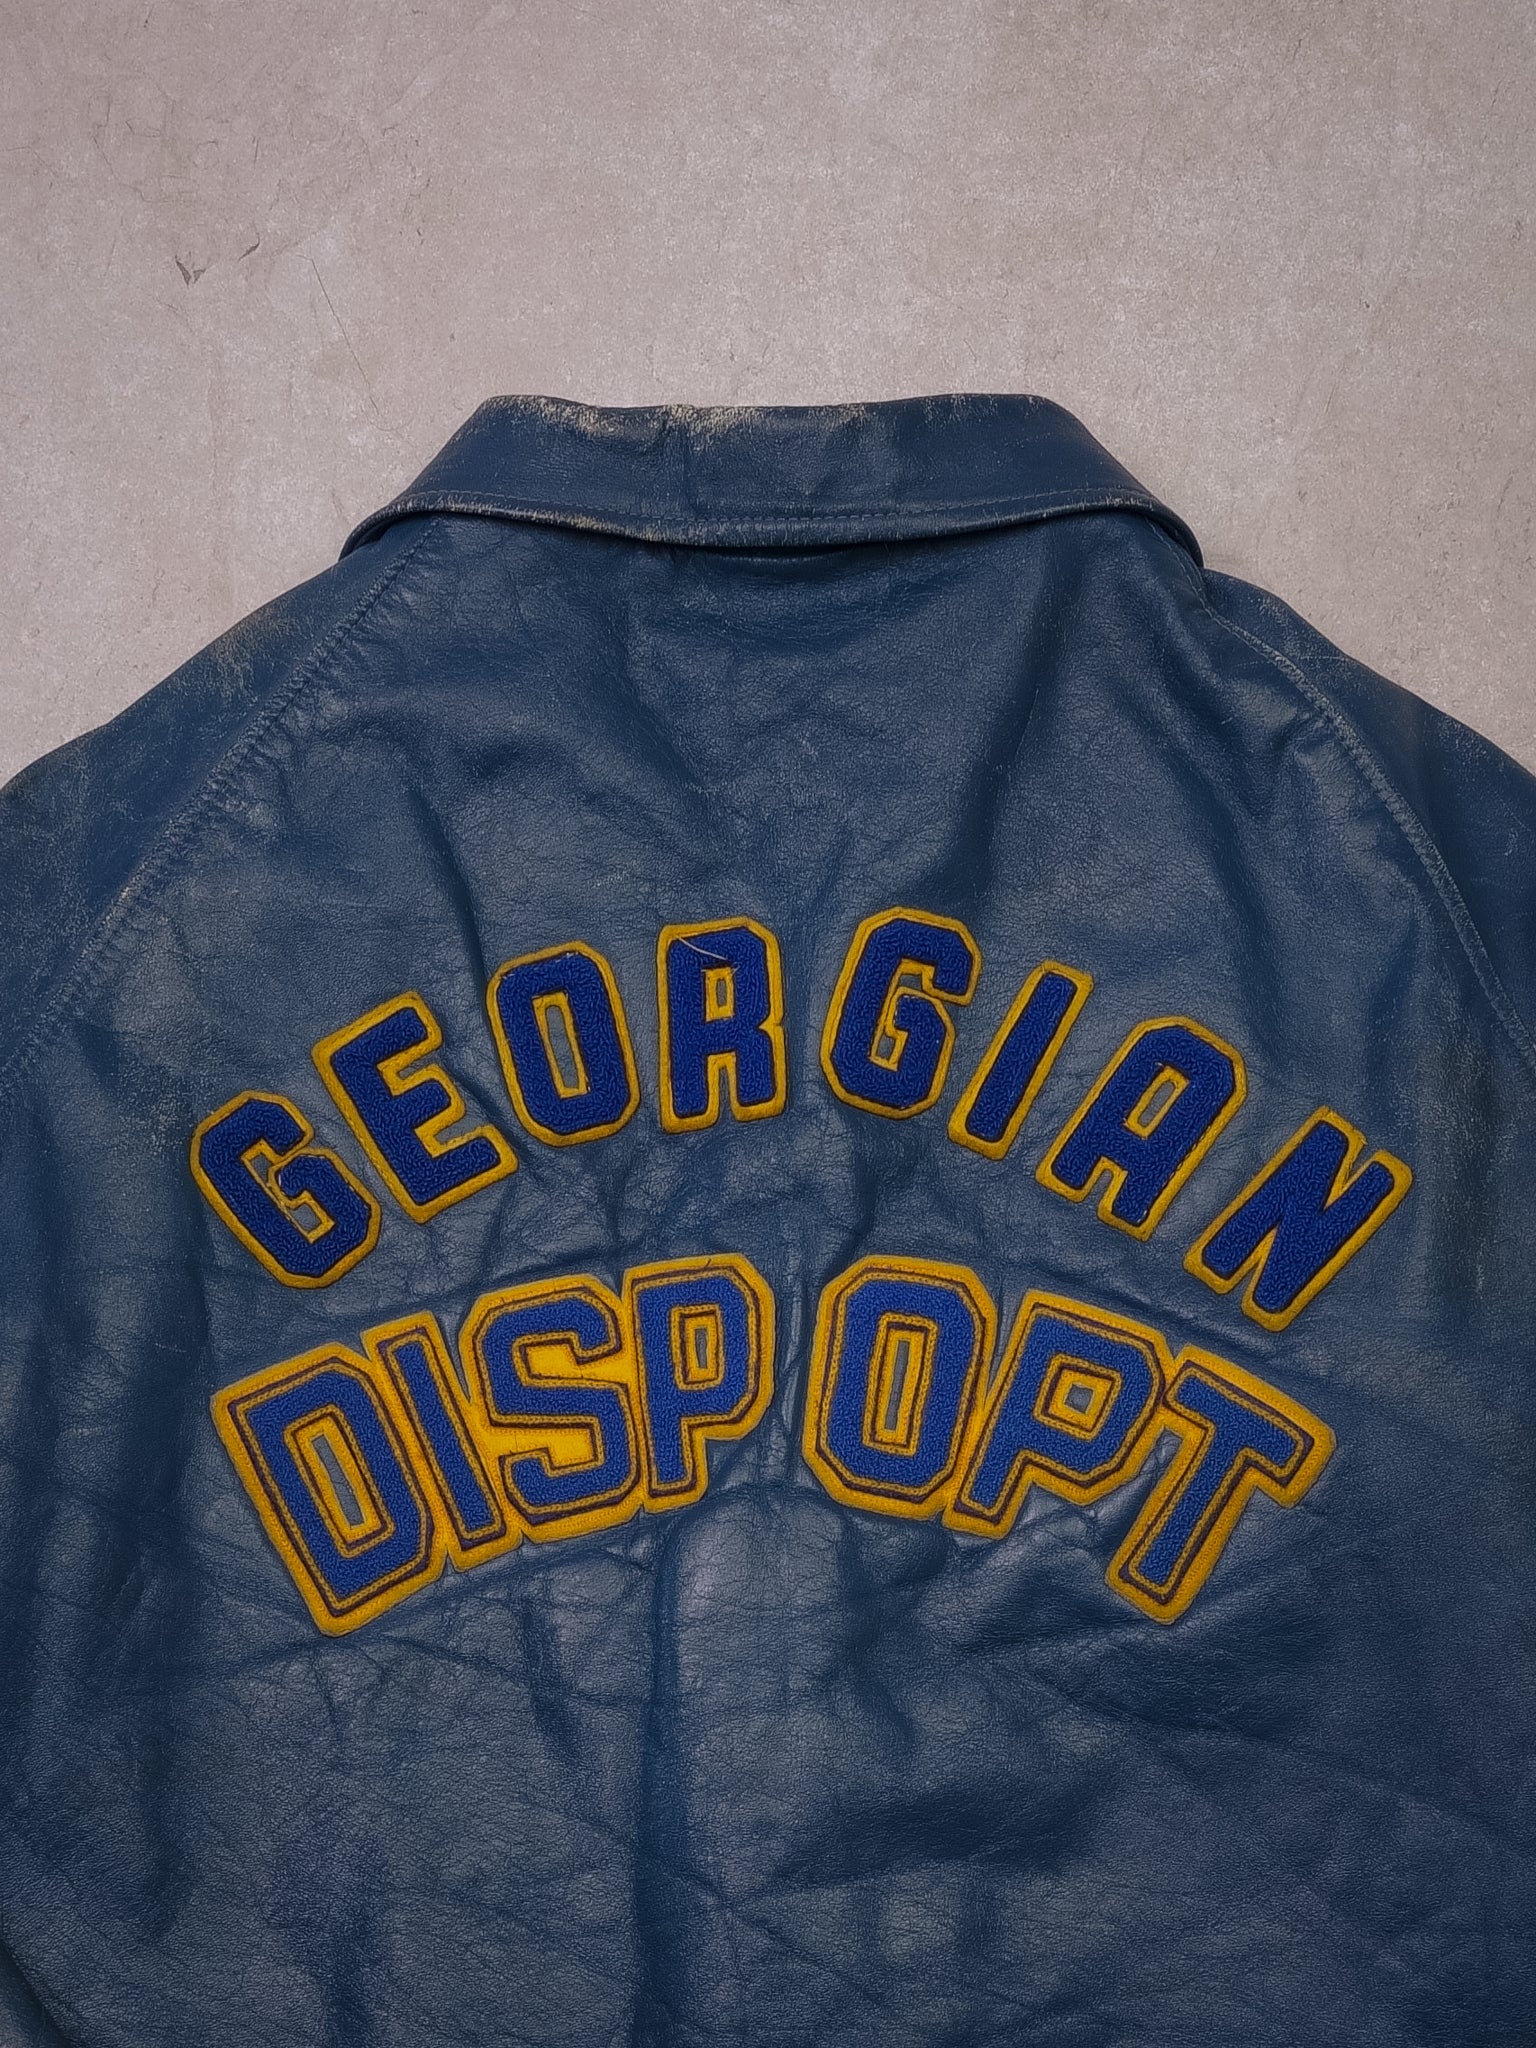 Vintage 80s Georgian College Leather Jacket (M/L)